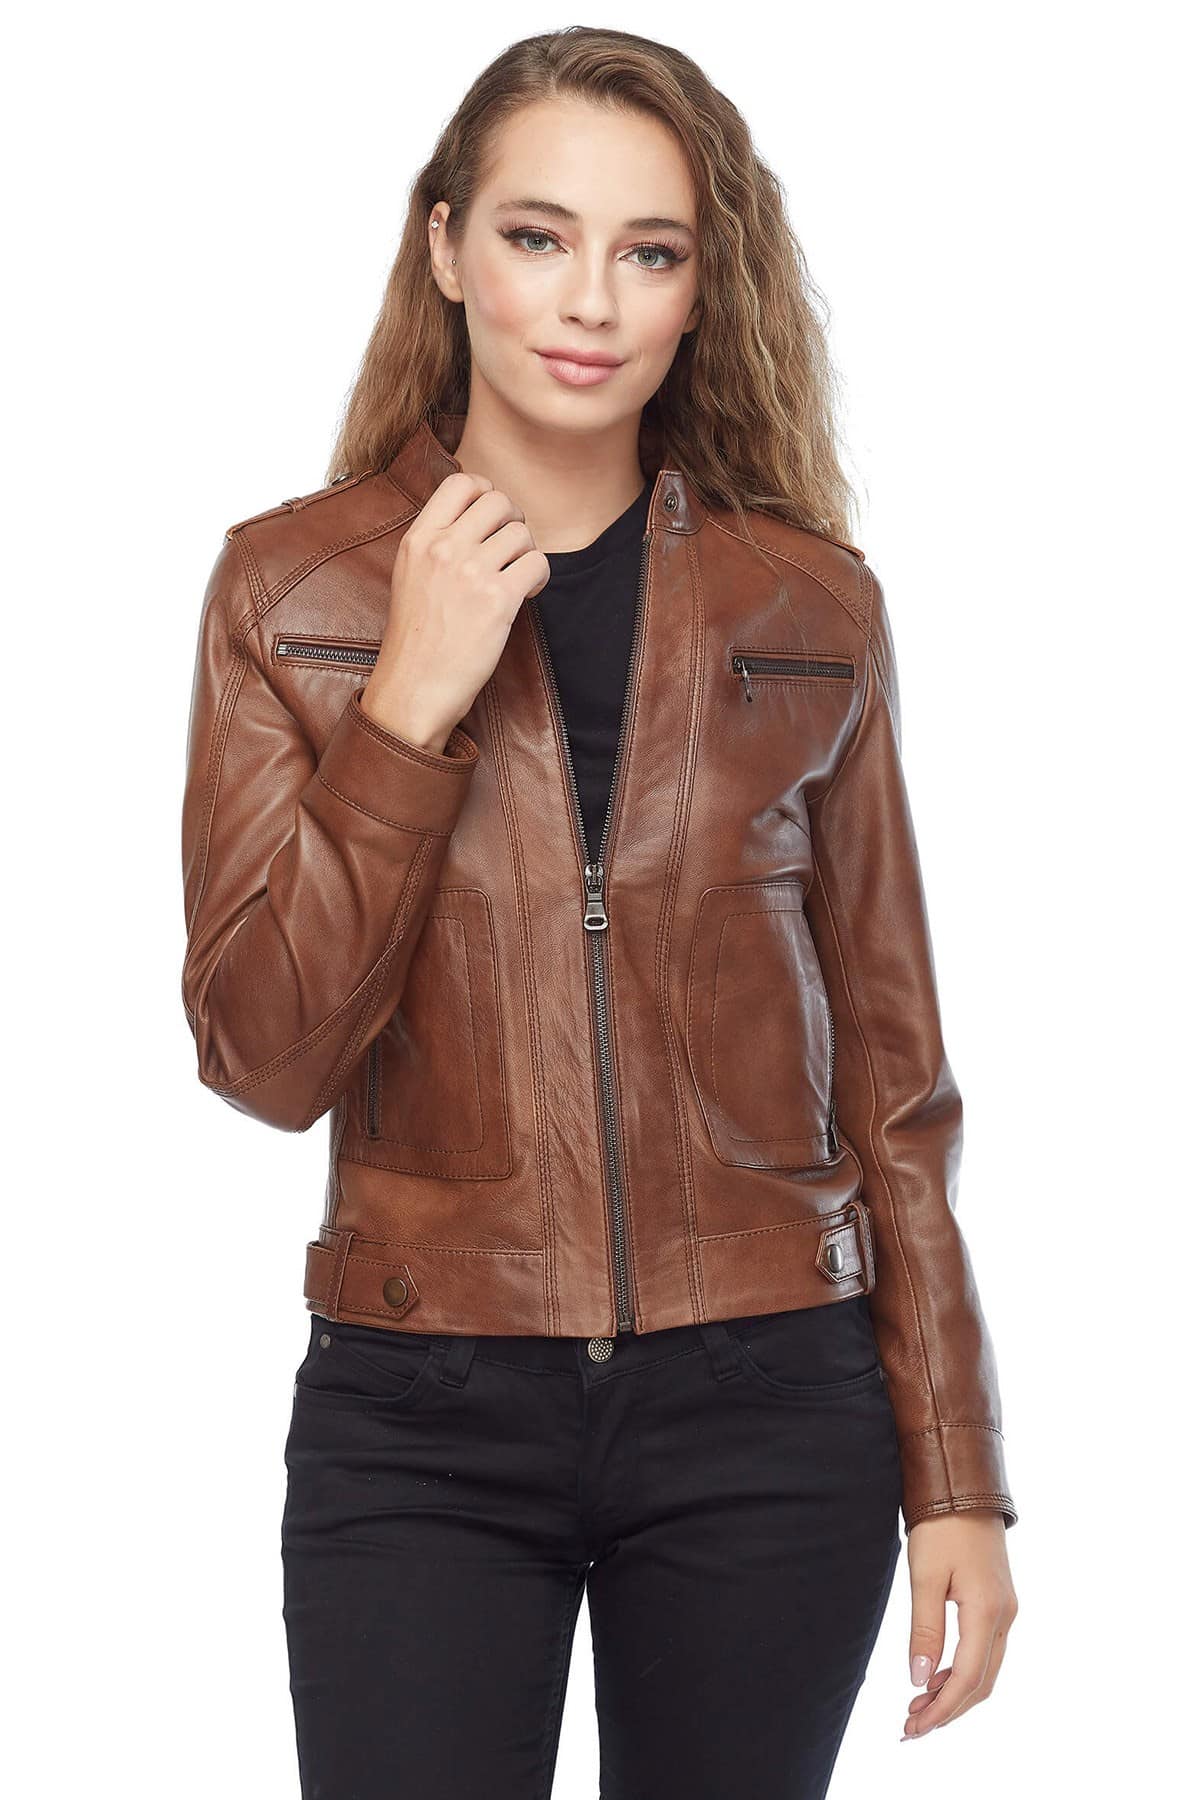 Sofia Genuine Leather Women’s Jacket Brown2